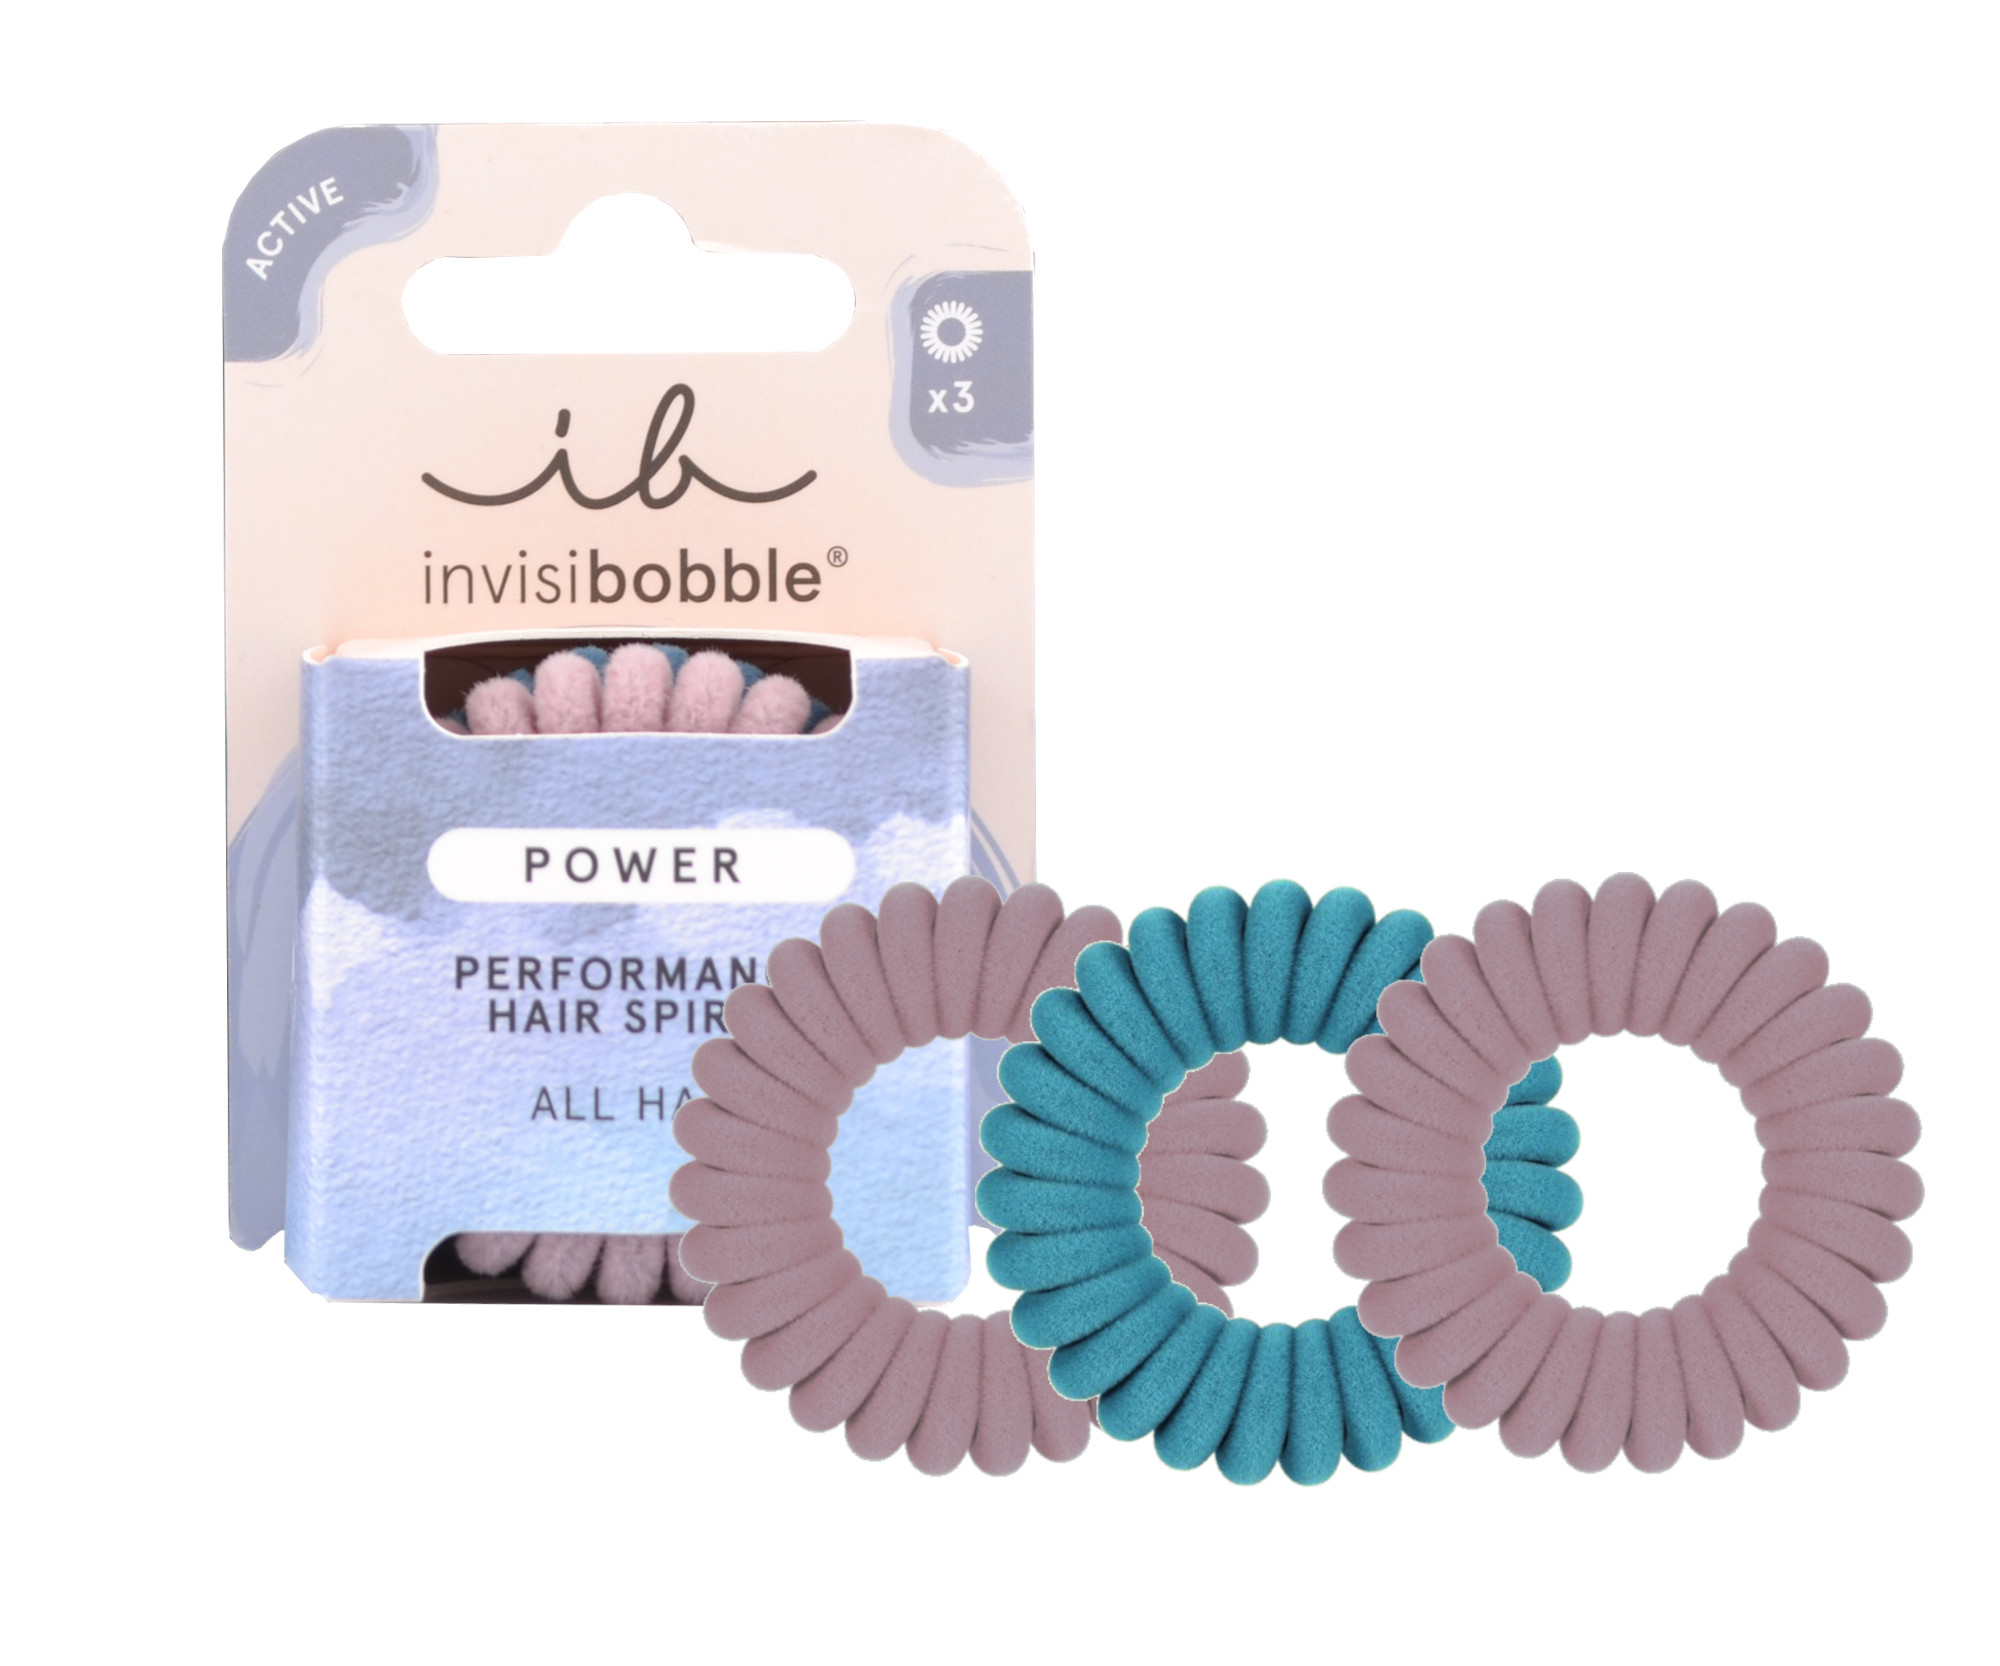 Spirálová gumička do vlasů Invisibobble Power Rose and Ice - 3 ks + dárek zdarma